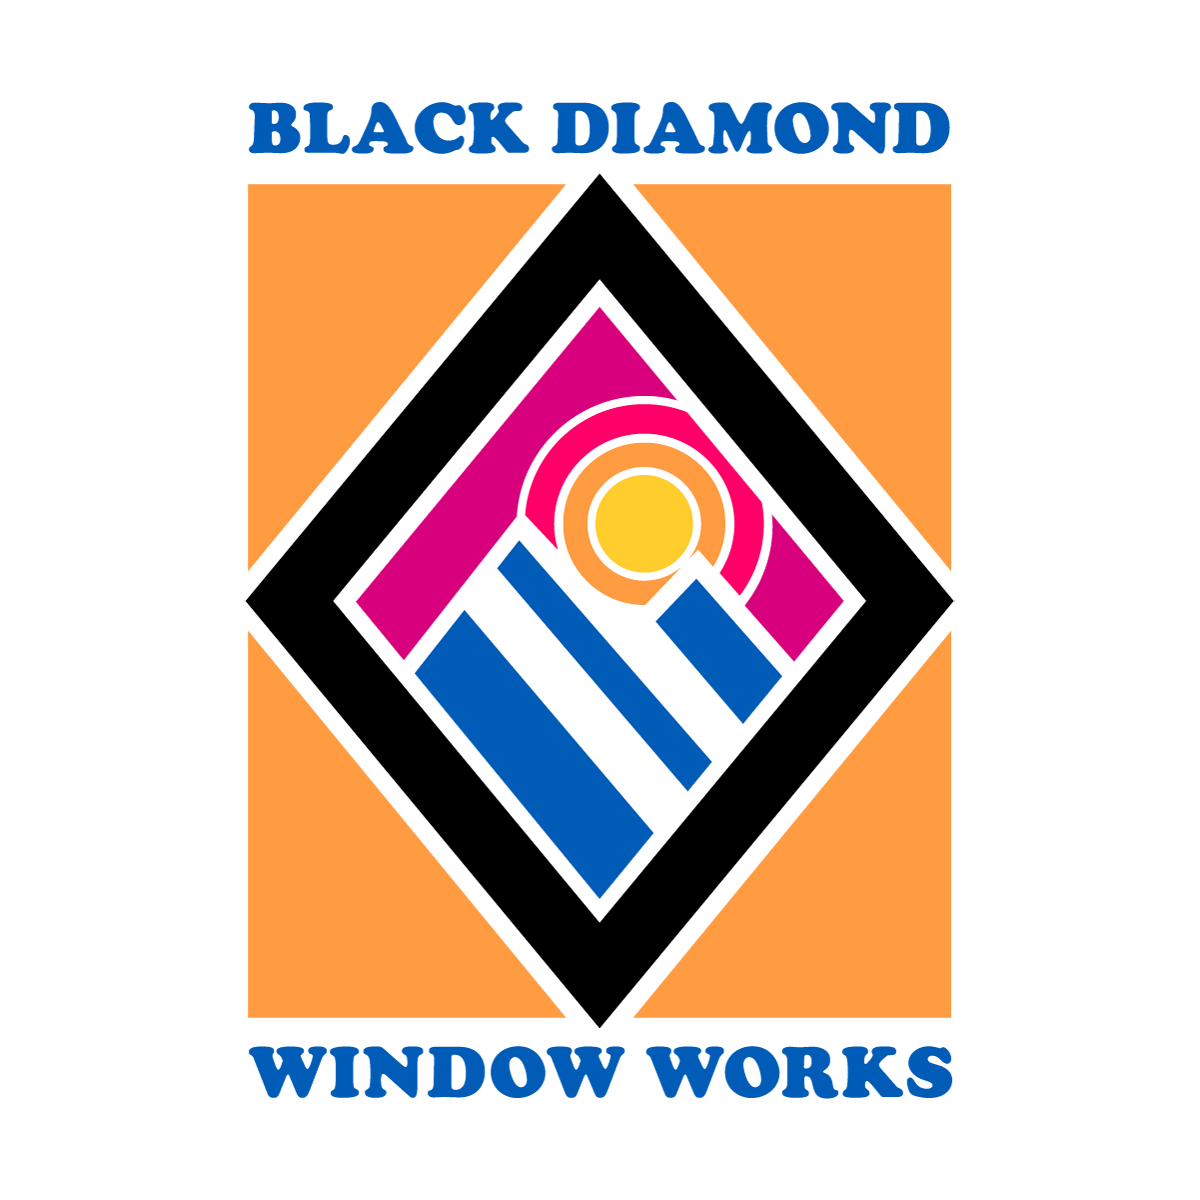 Black Diamond Window Works